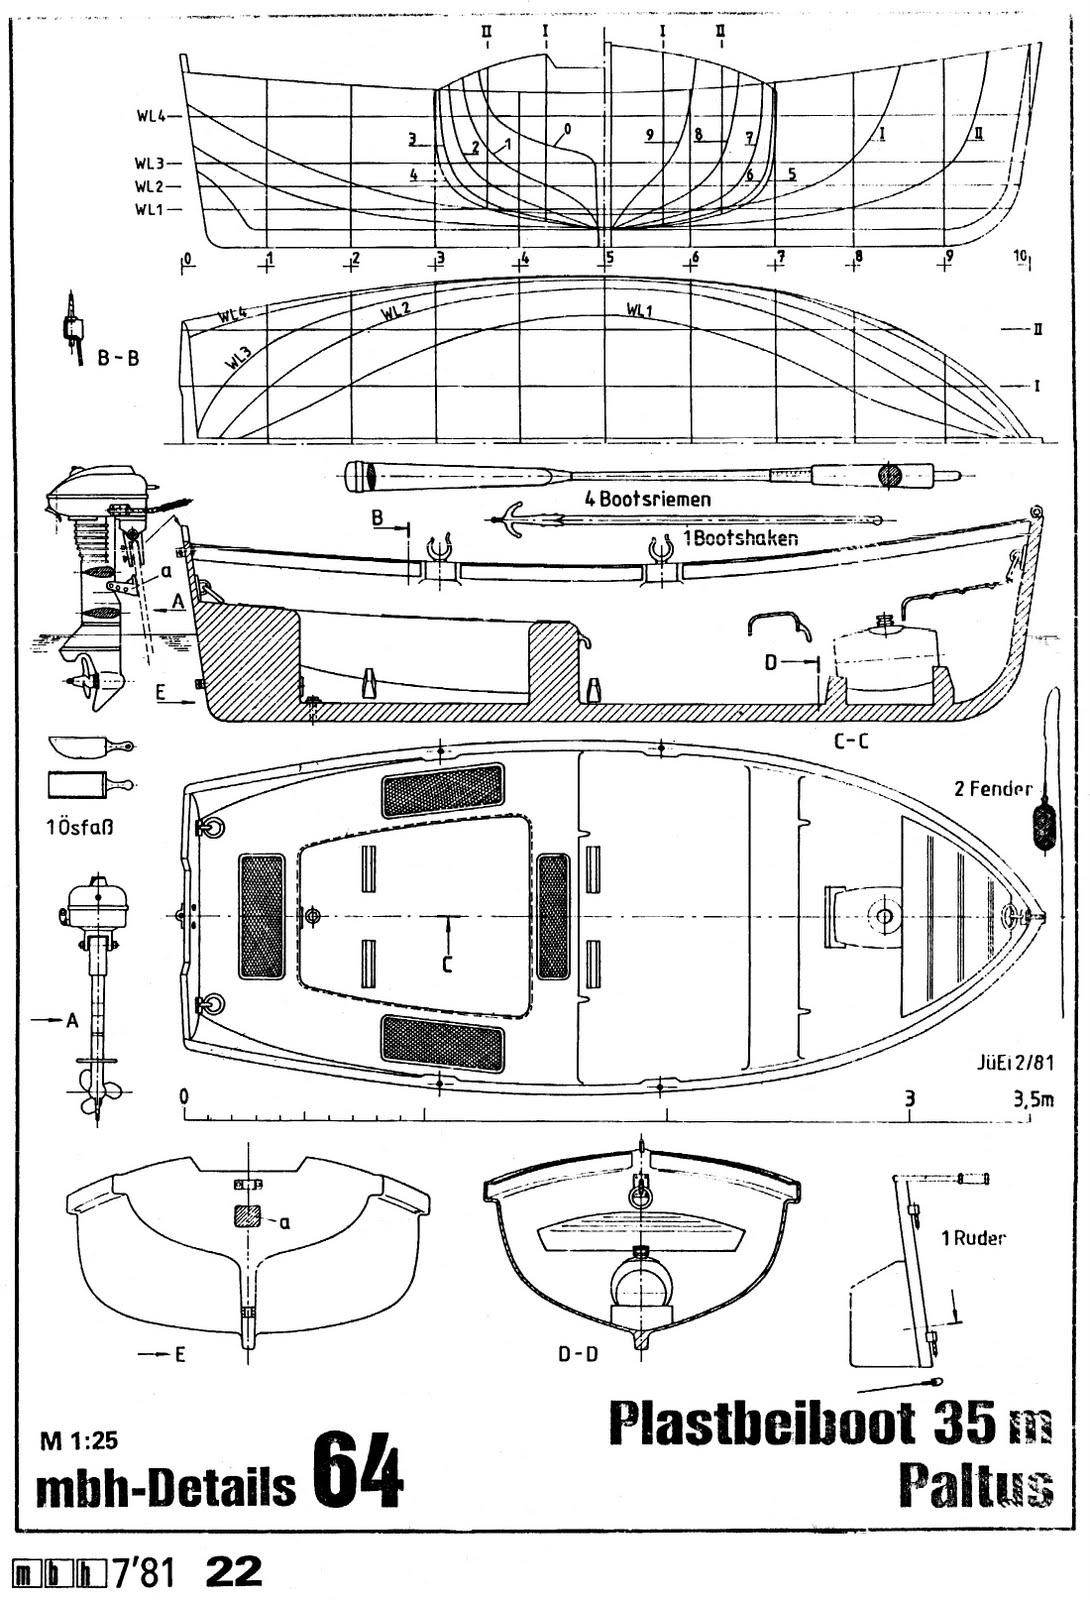 plan de canots small boat plan